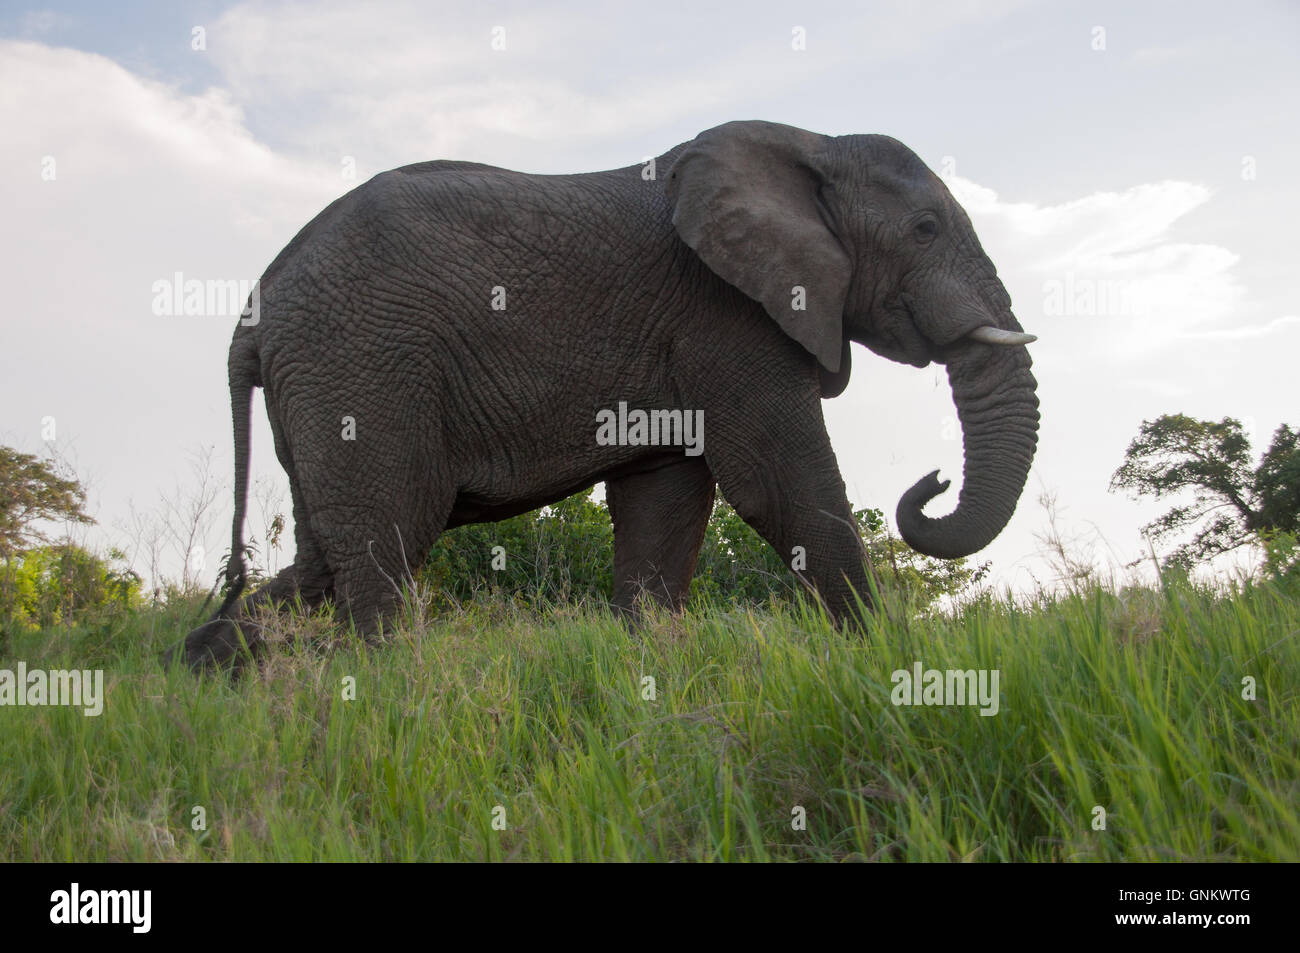 Close-up photograph of an Elephant. Stock Photo